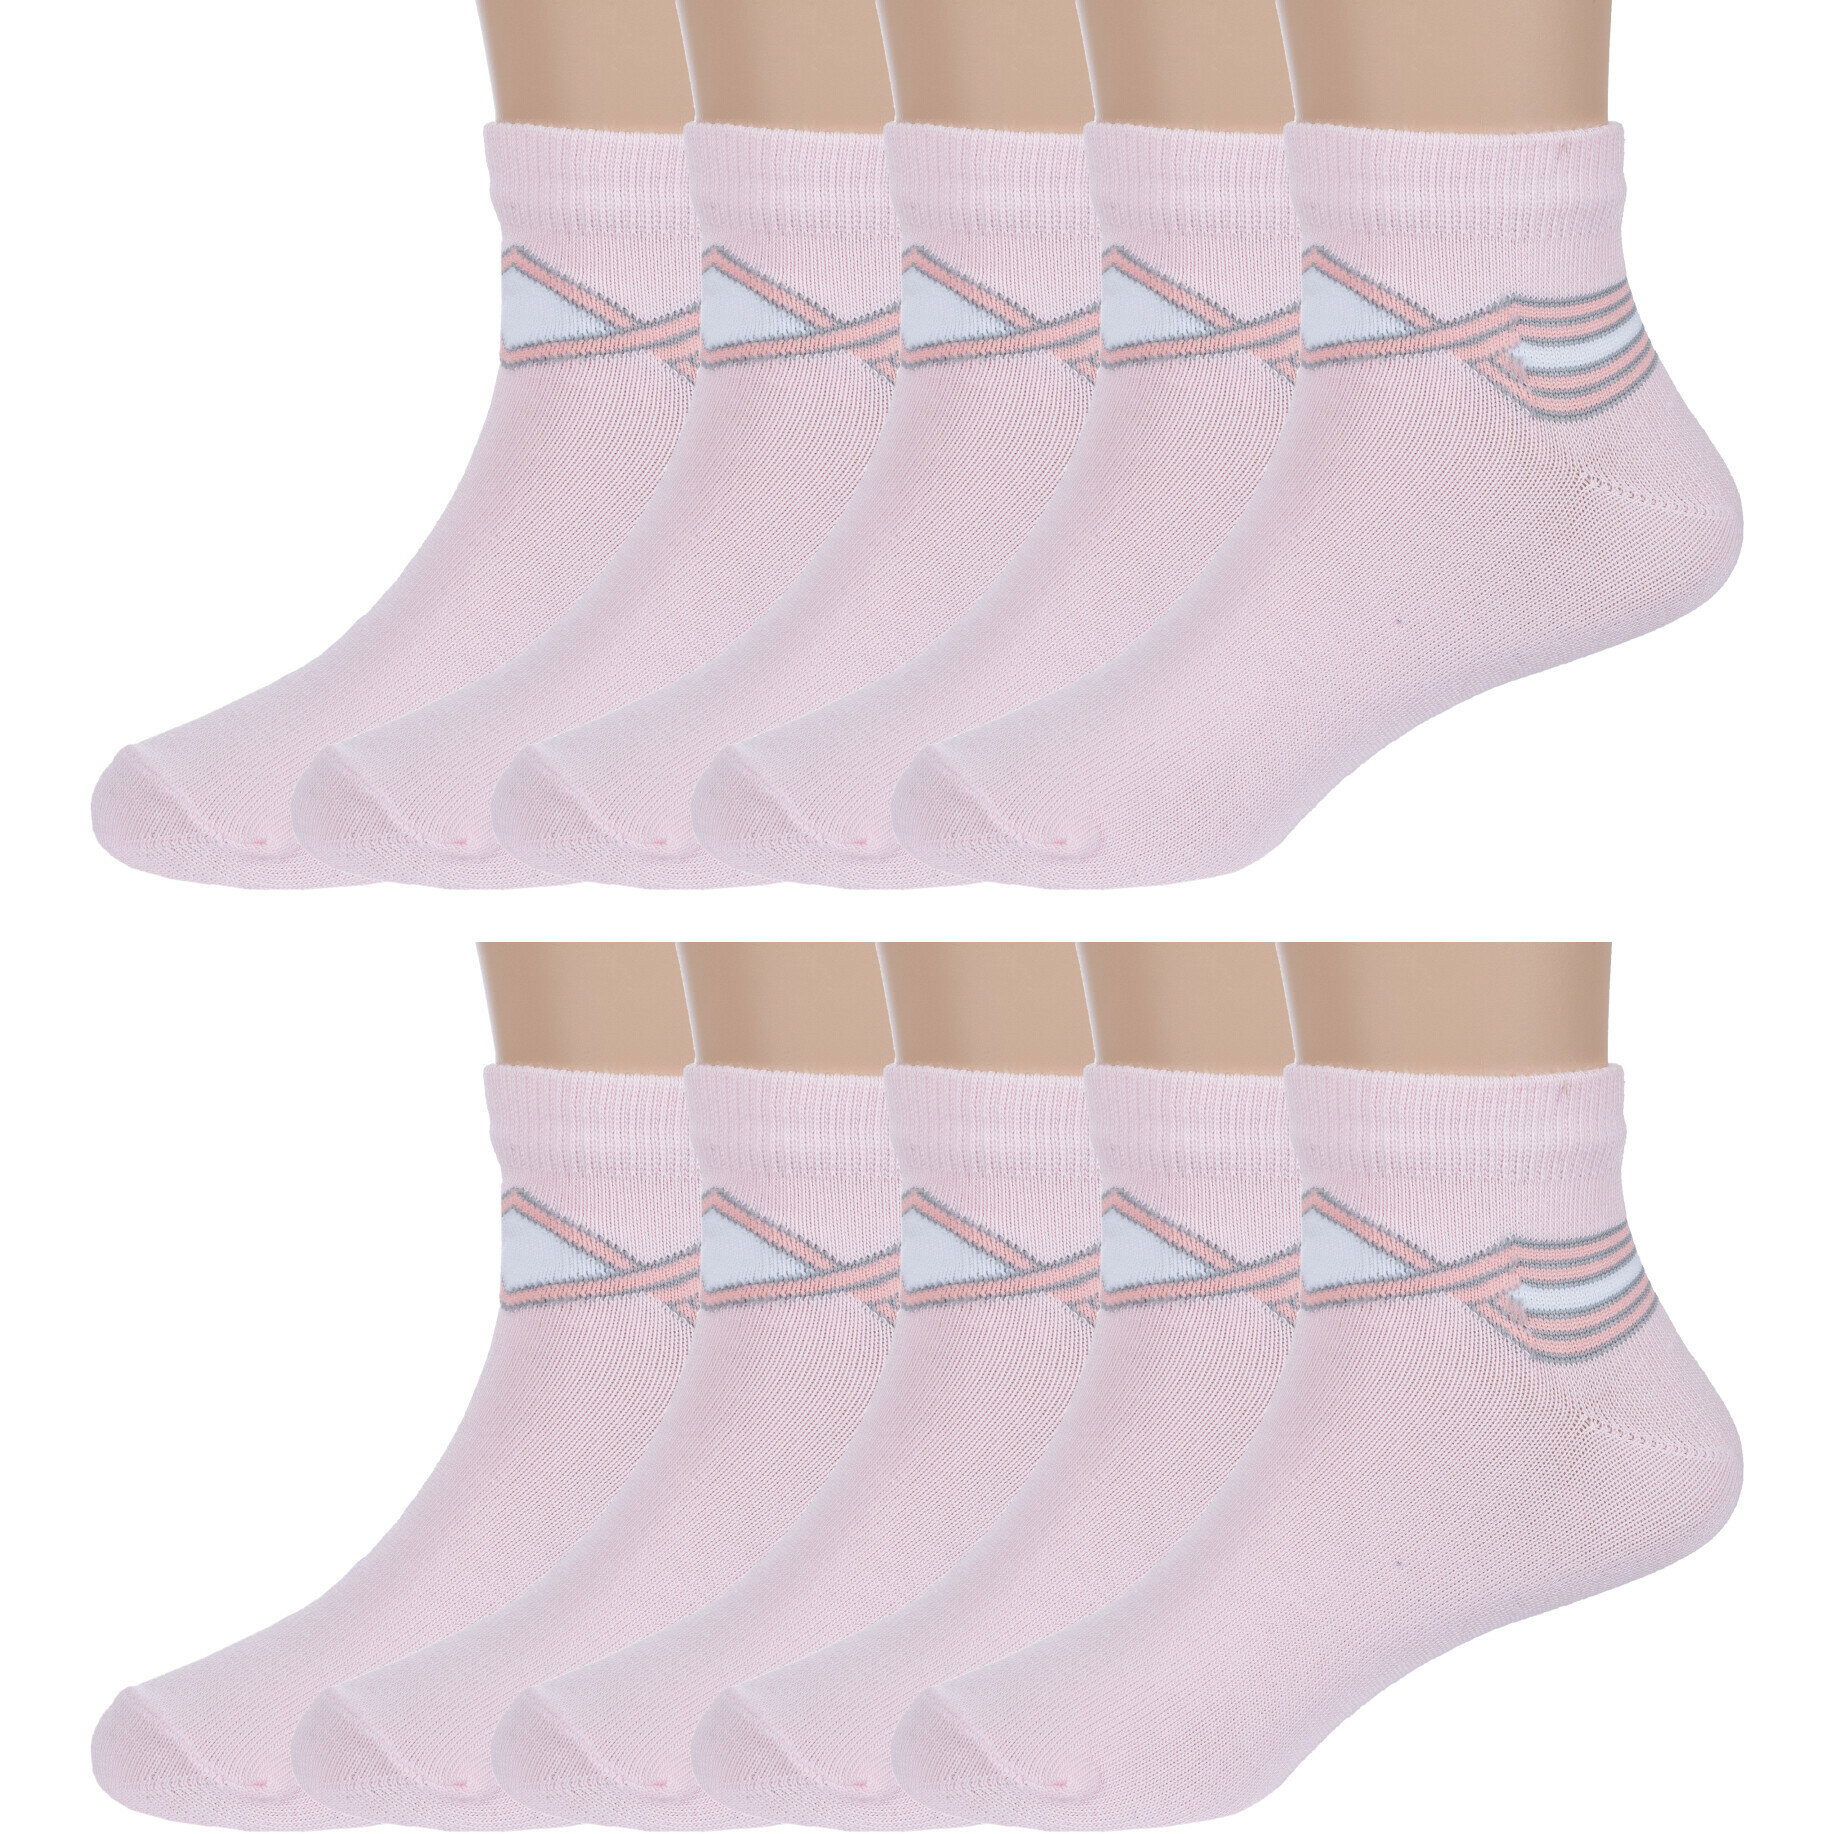 Комплект из 10 пар детских носков "Борисоглебский трикотаж" 10-8С16 размер 16-18